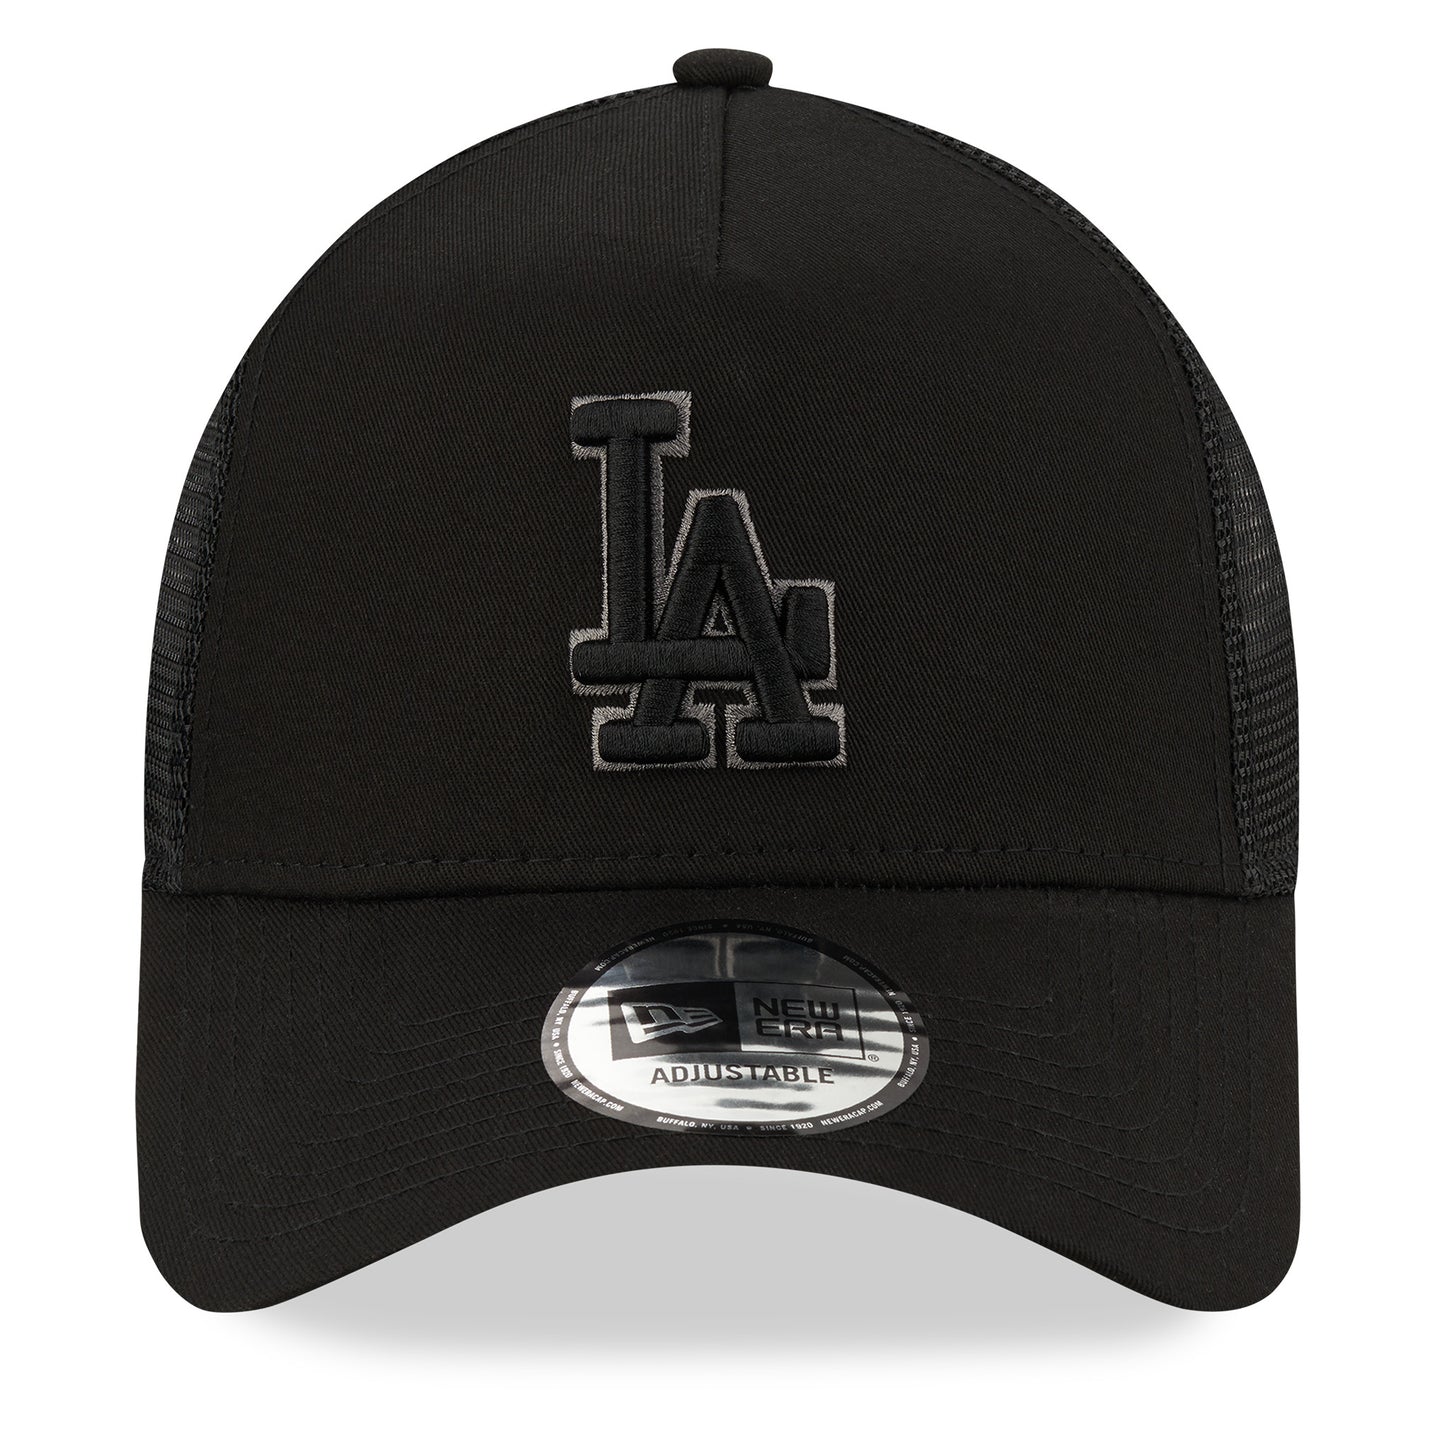 BOB Team Logo Trucker Cap - Los Angeles Dodgers - Black - Headz Up 